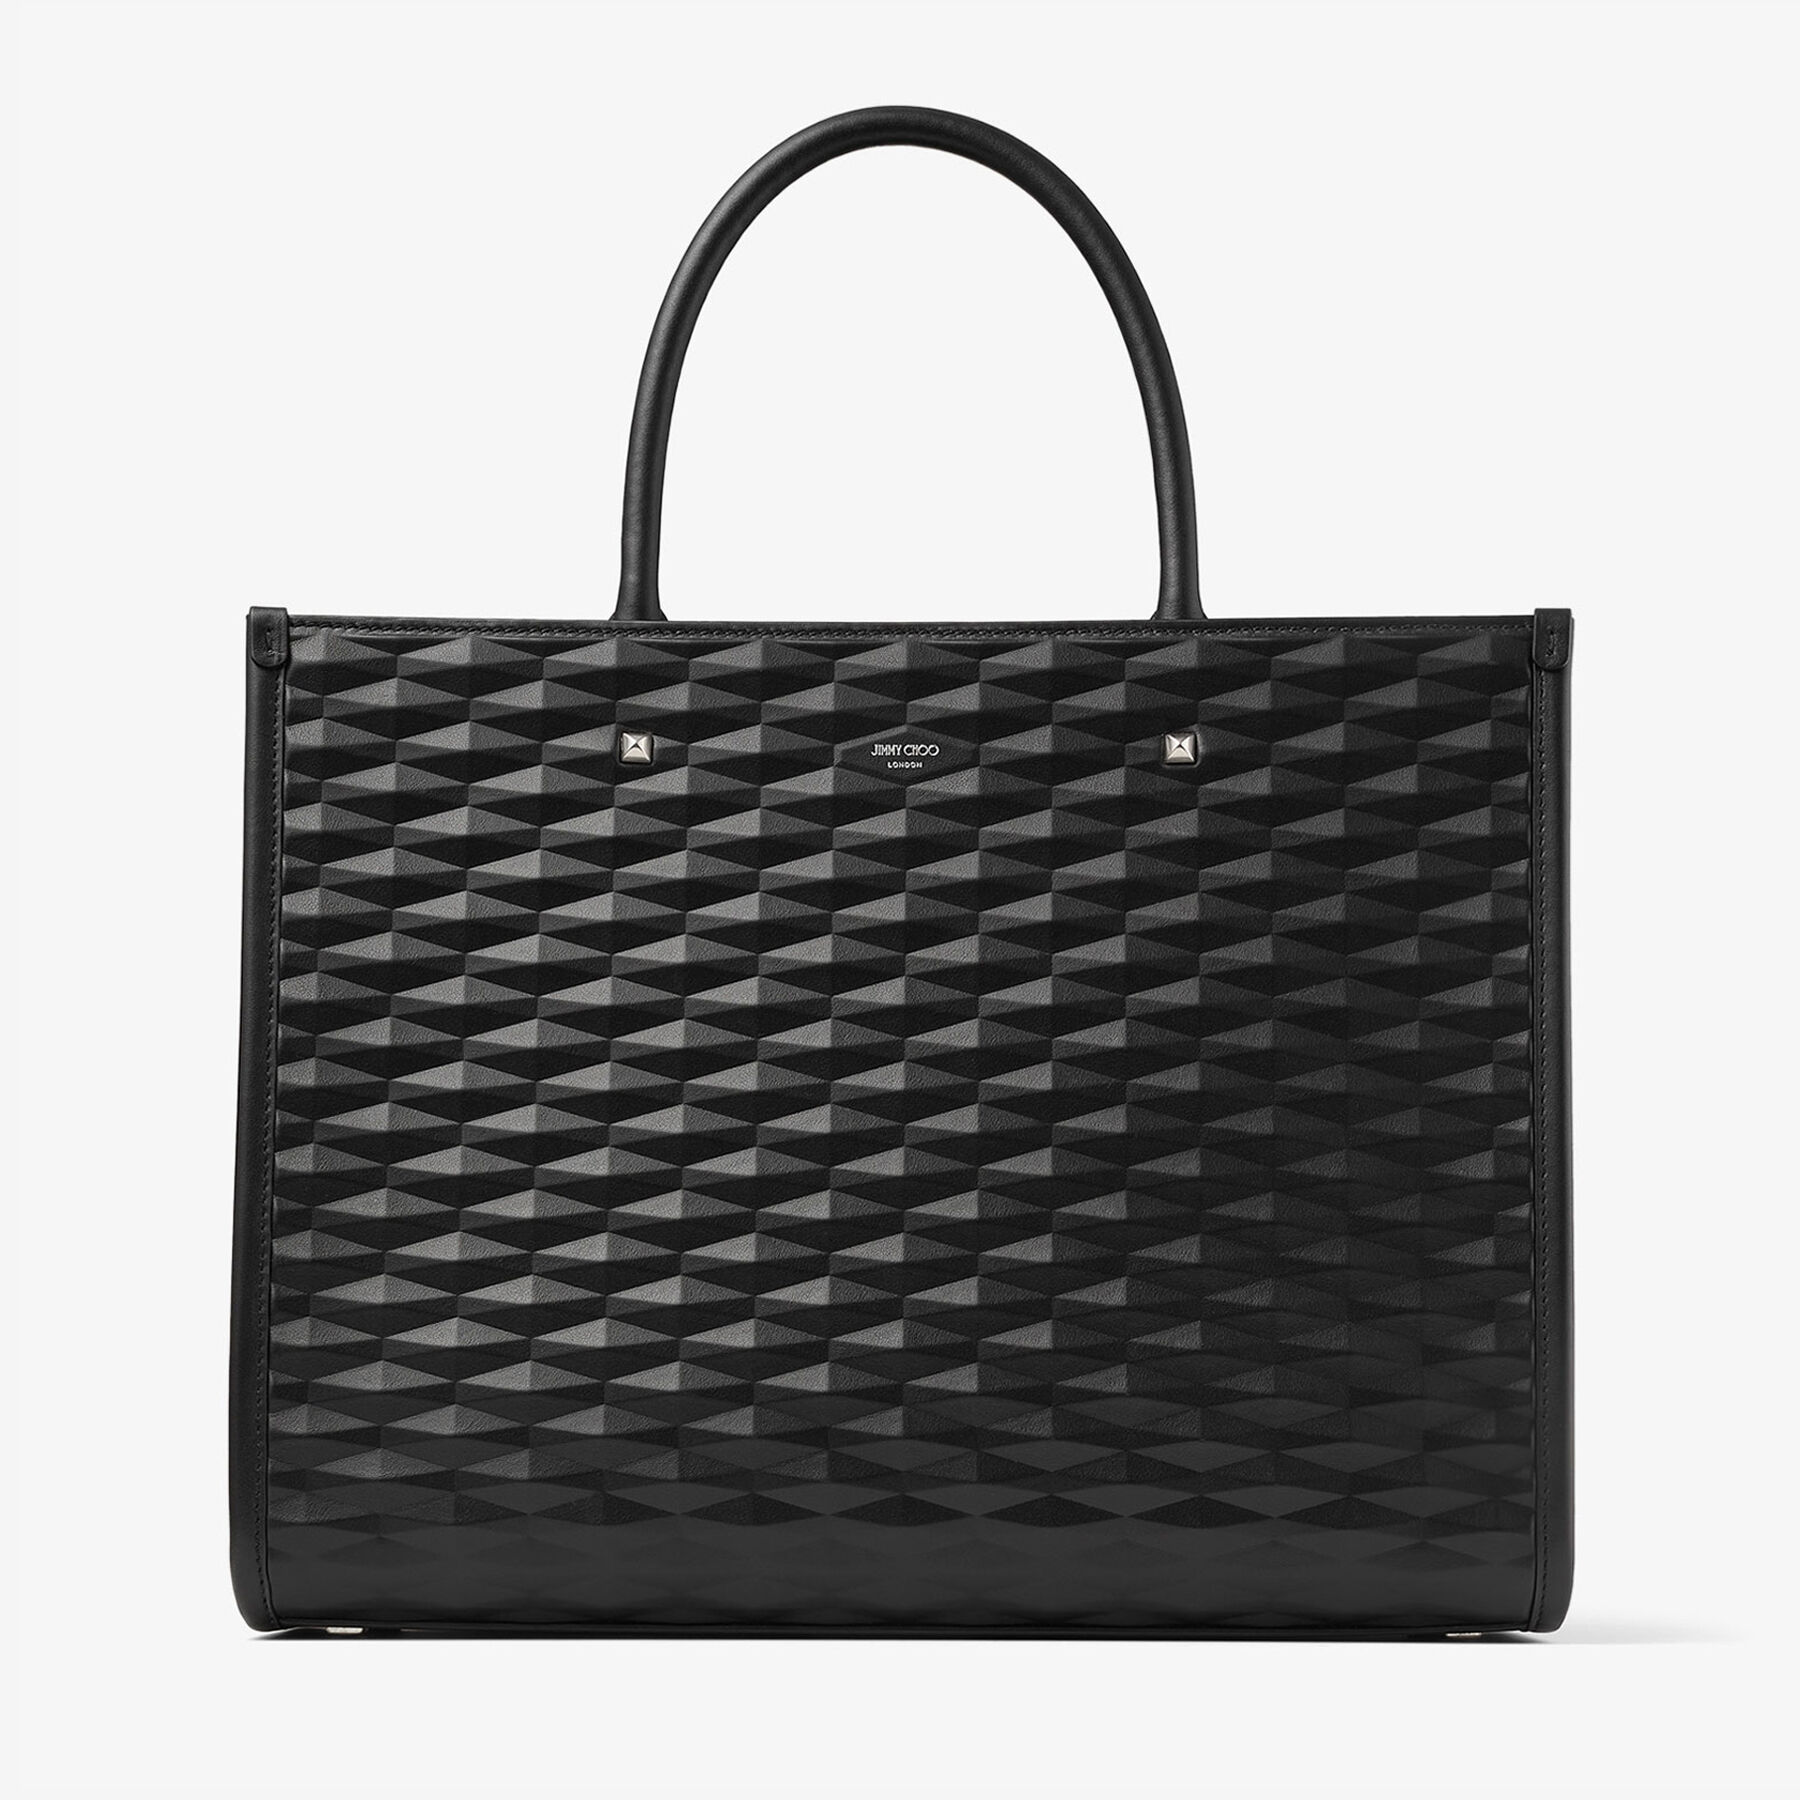 Diamond Chain Top Handle | Black Calf Leather Top Handle Bag | New  Collection | JIMMY CHOO